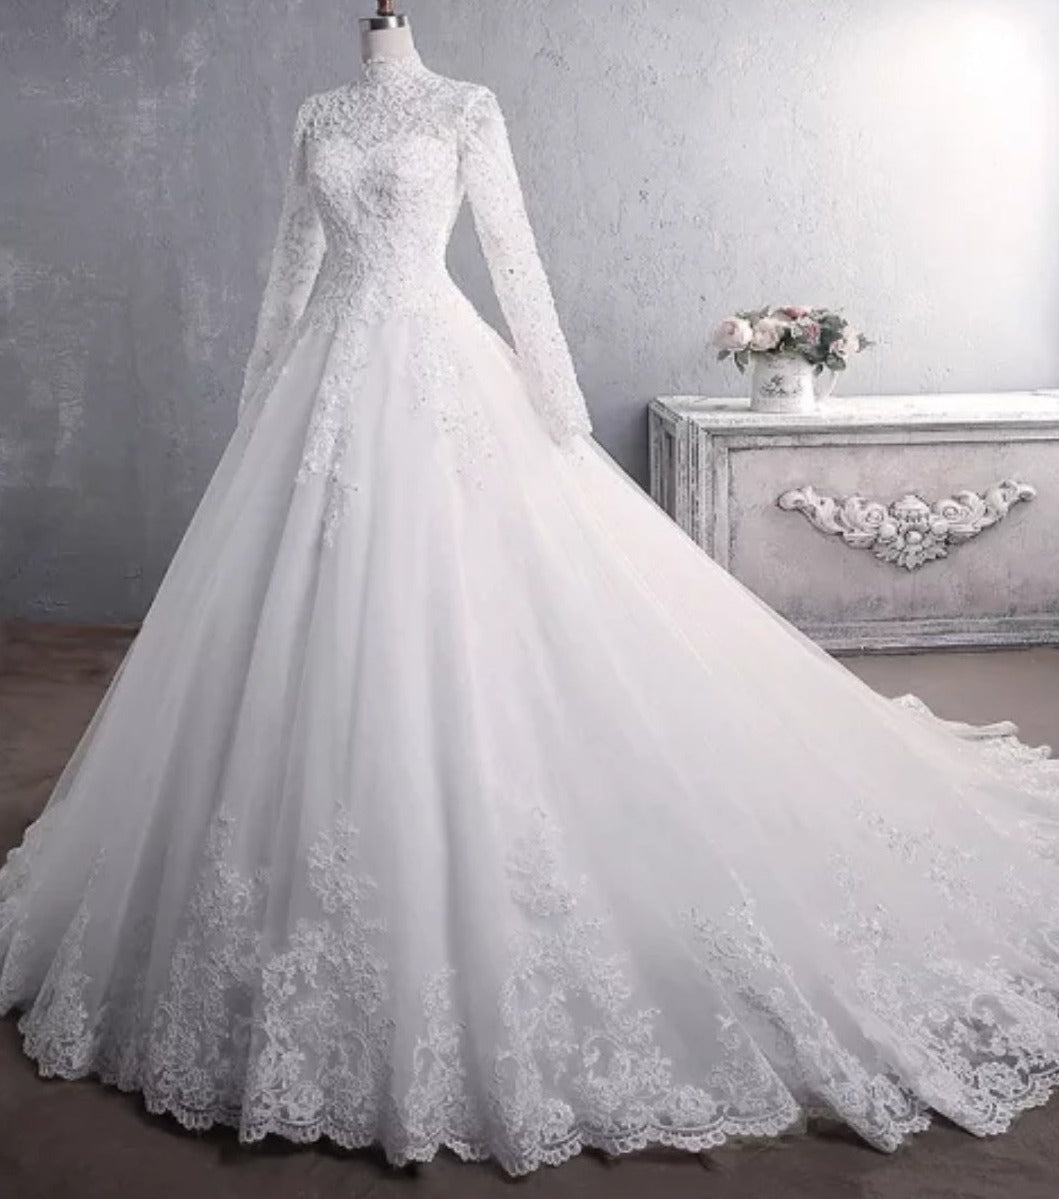 Low Price High Quality Wedding Dresses| Alibaba.com